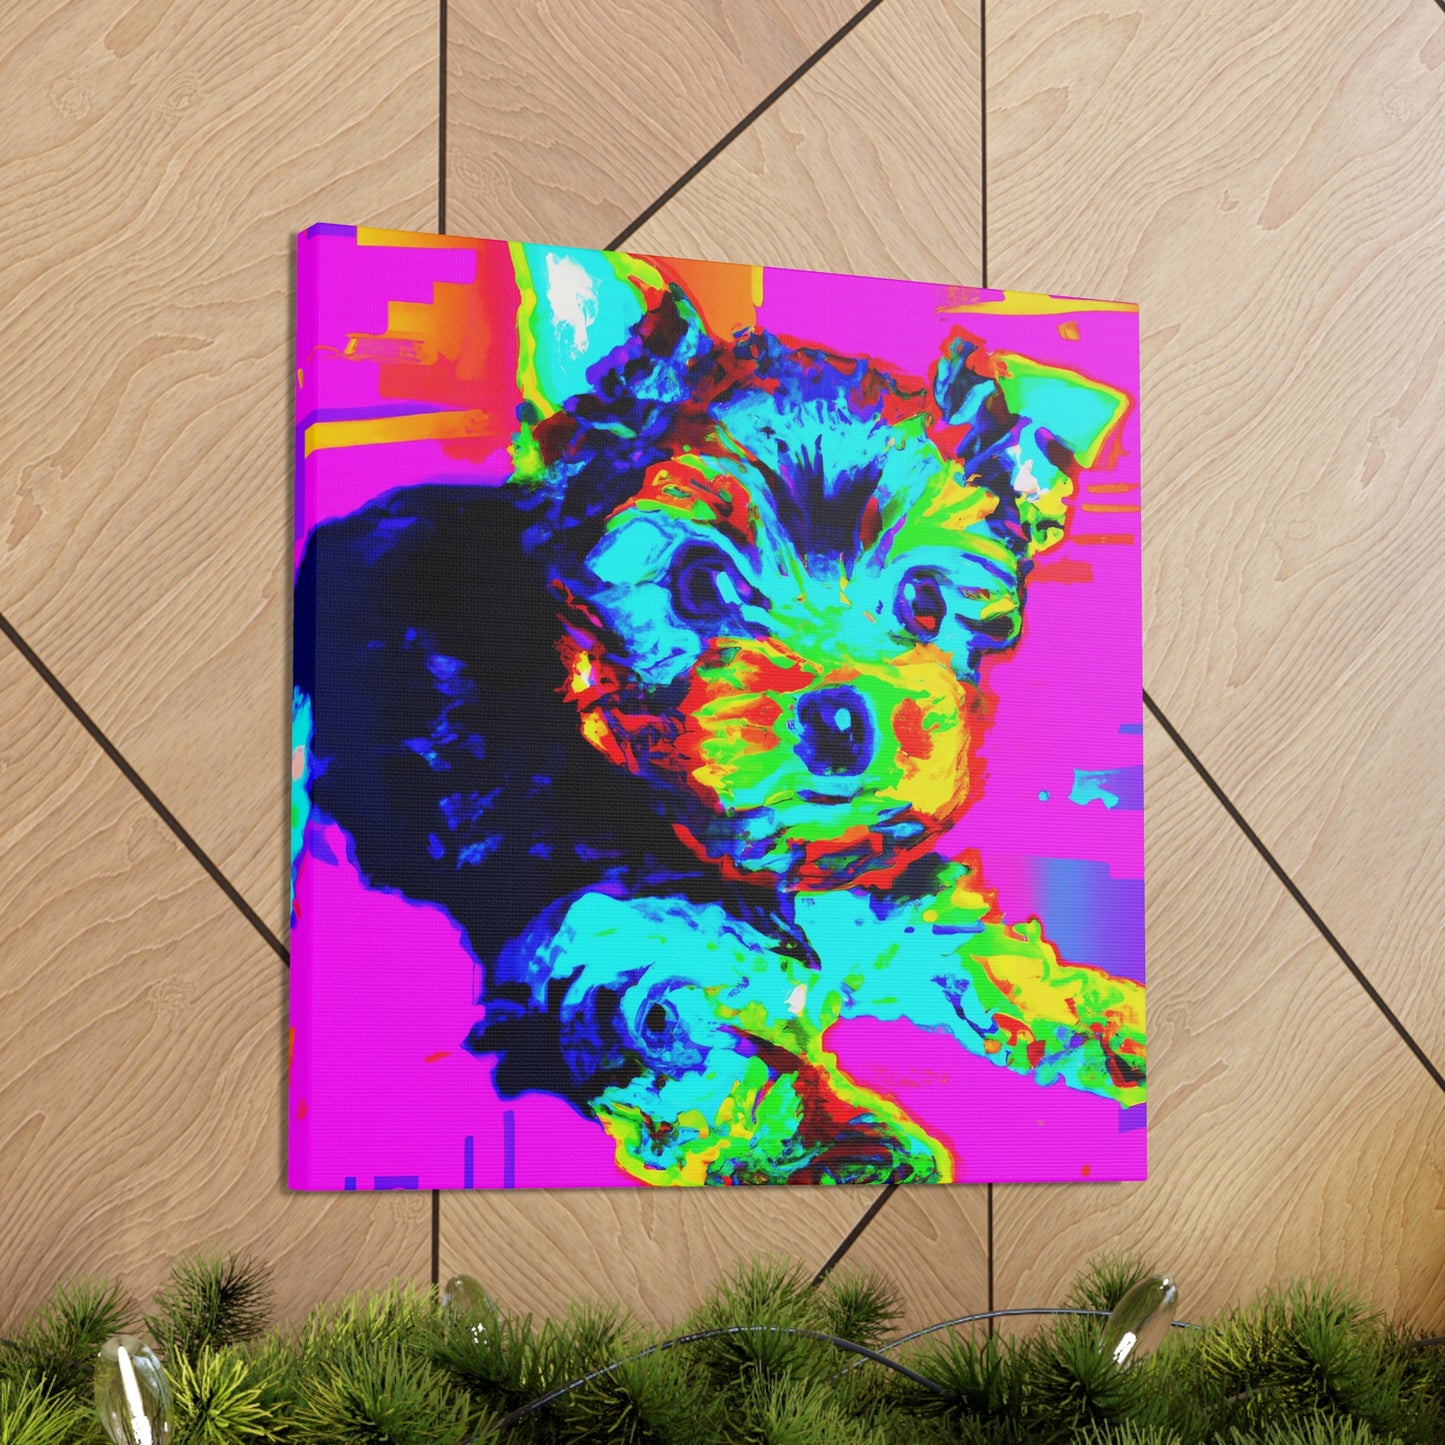 Kingston Dionita I - Yorkie Puppy - Canvas